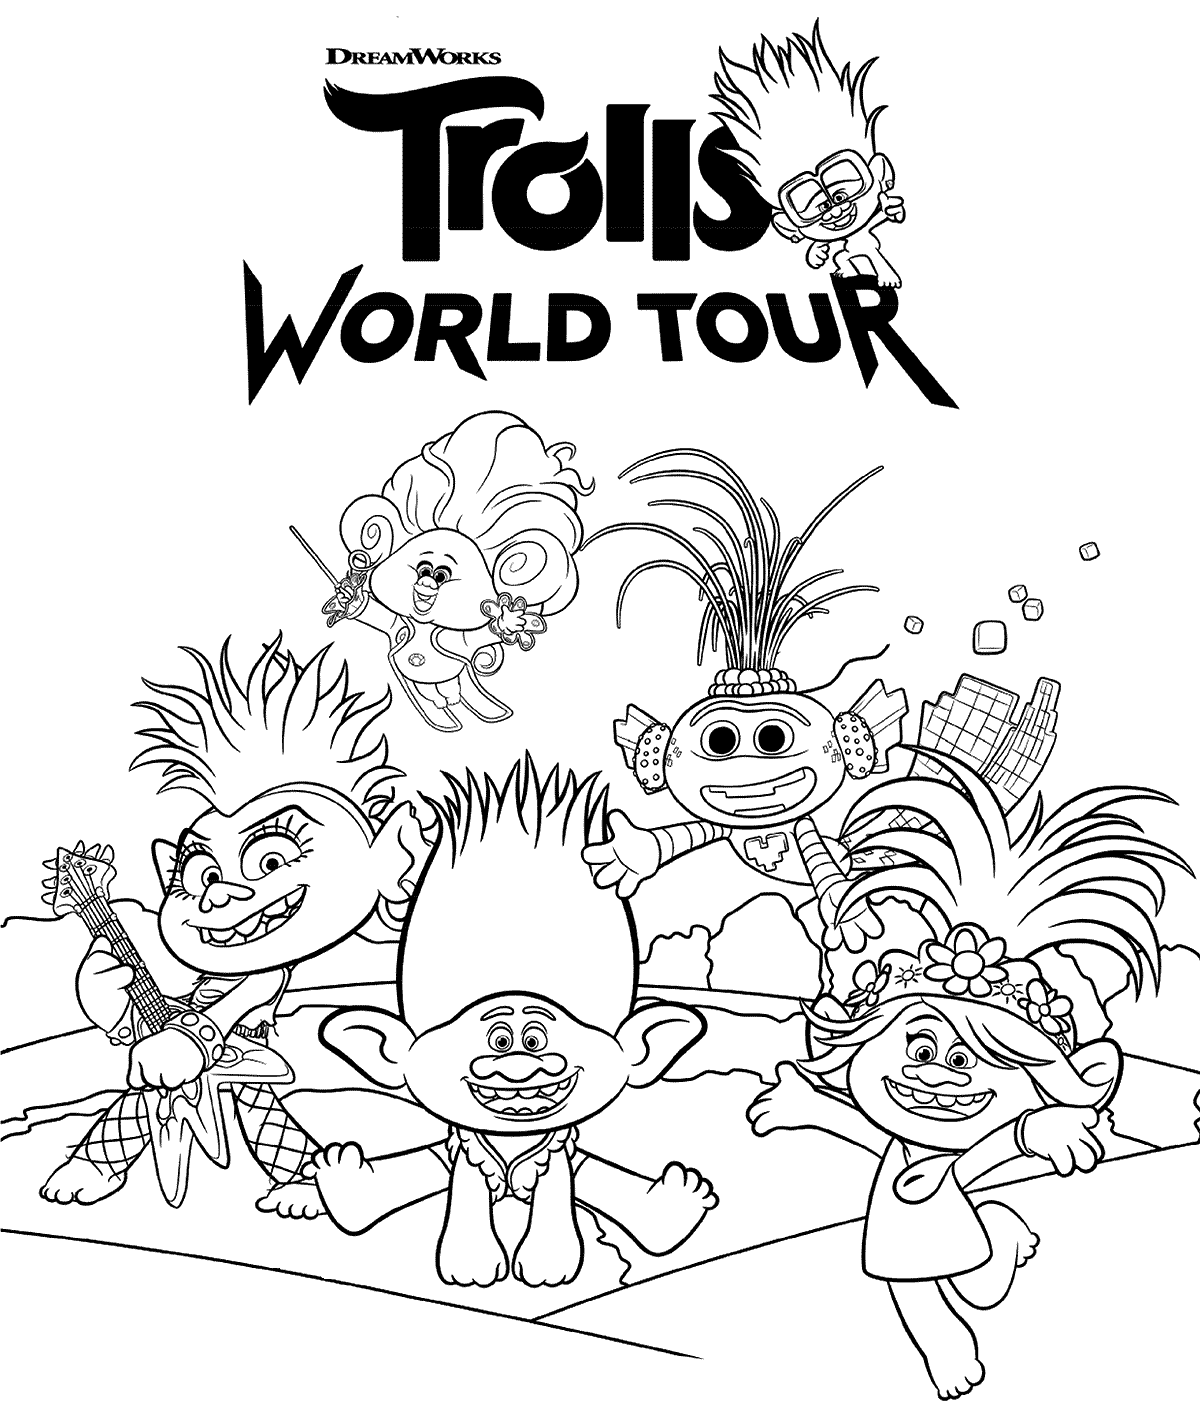 DreamWorks Trolls 2 World Tour